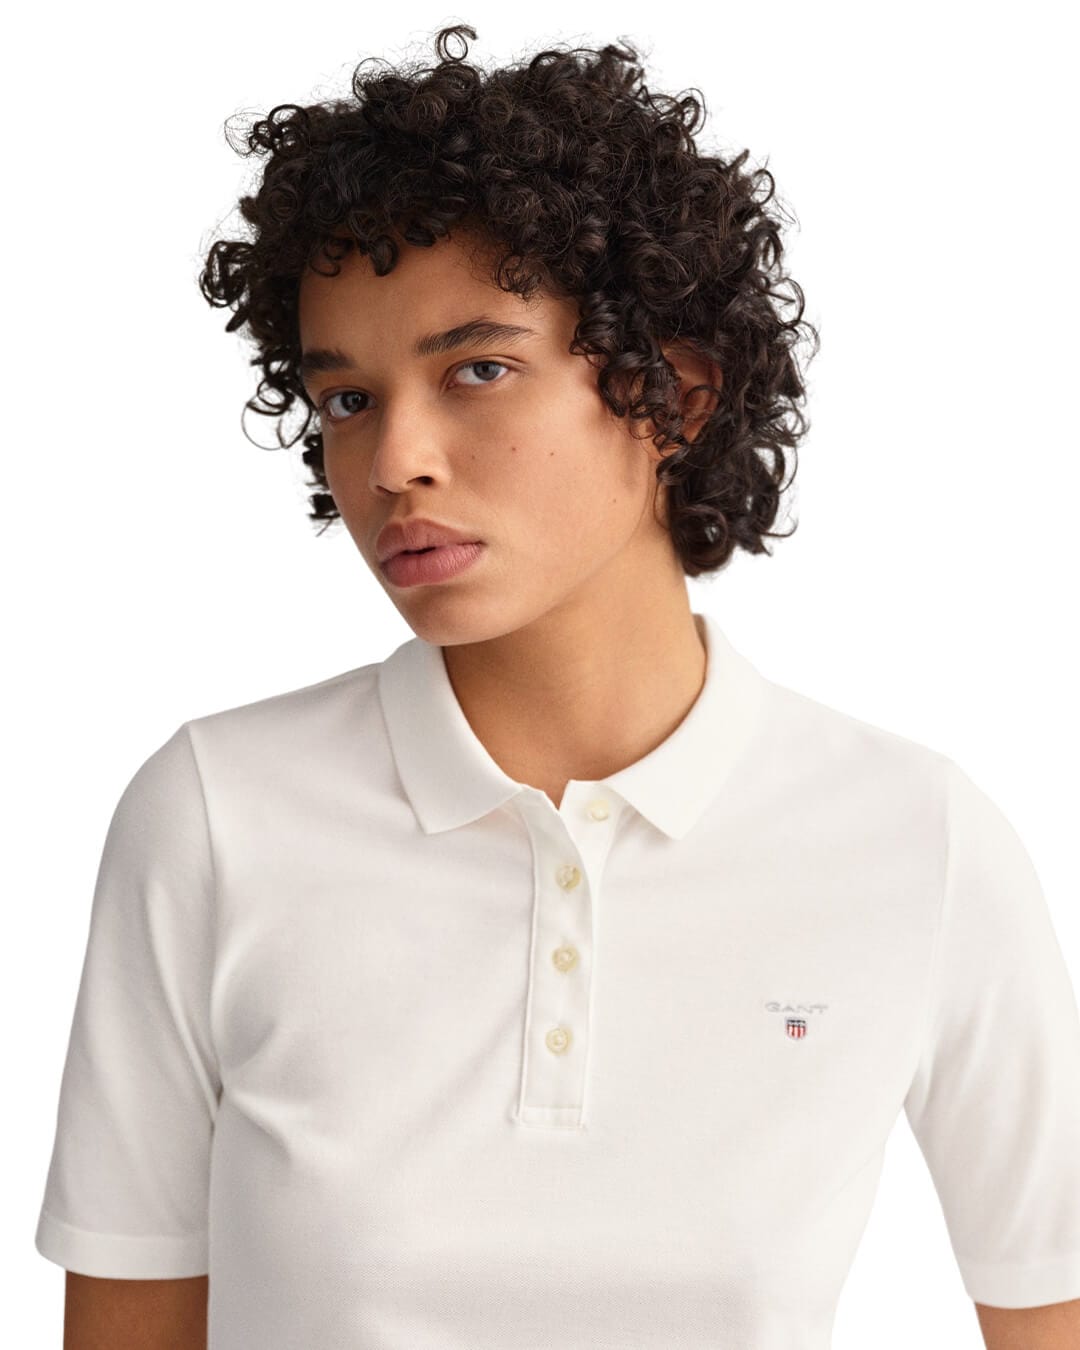 Gant Polo Shirts Gant White Original Long-Short Sleeve Piqué Polo Shirt